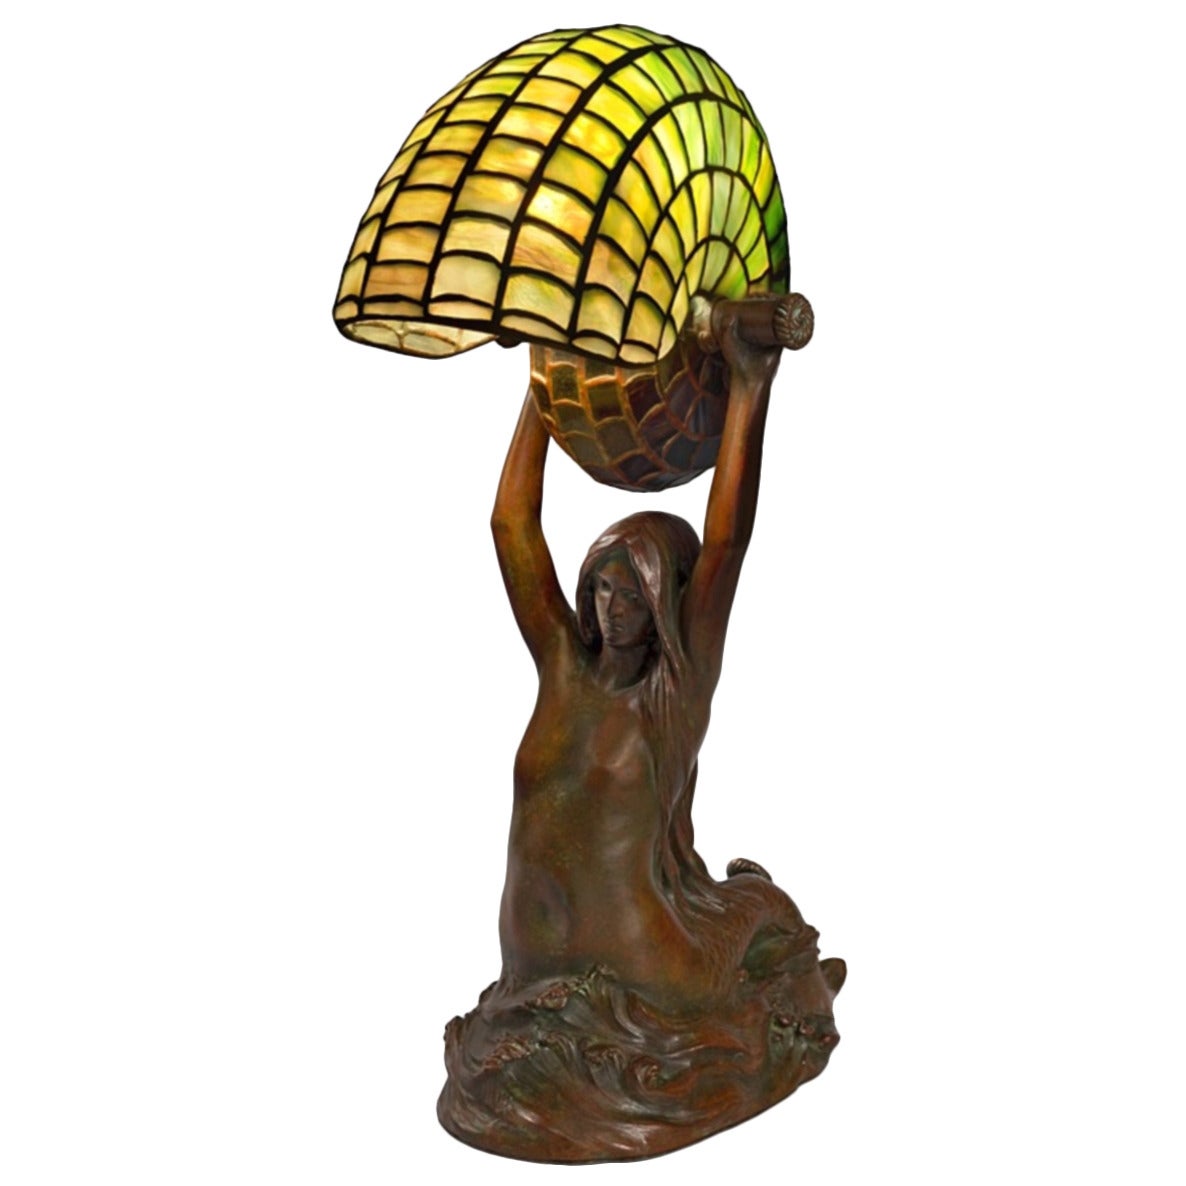 Tiffany Studios New York "Nautilus" Table Lamp with Gudebrod "Mermaid" Base